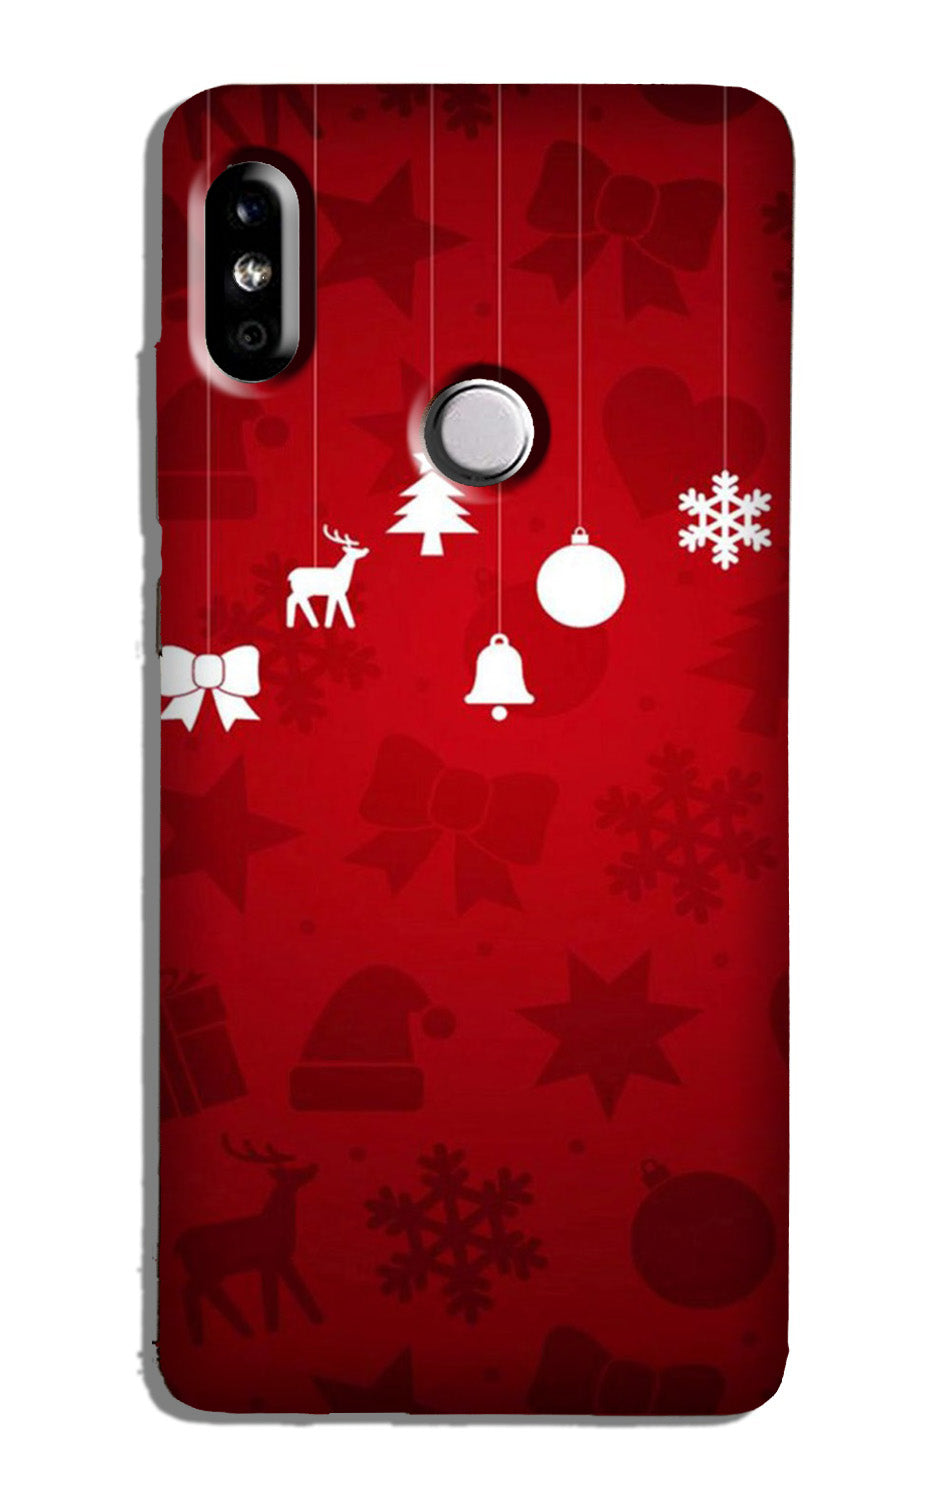 Christmas Case for Redmi 6 Pro